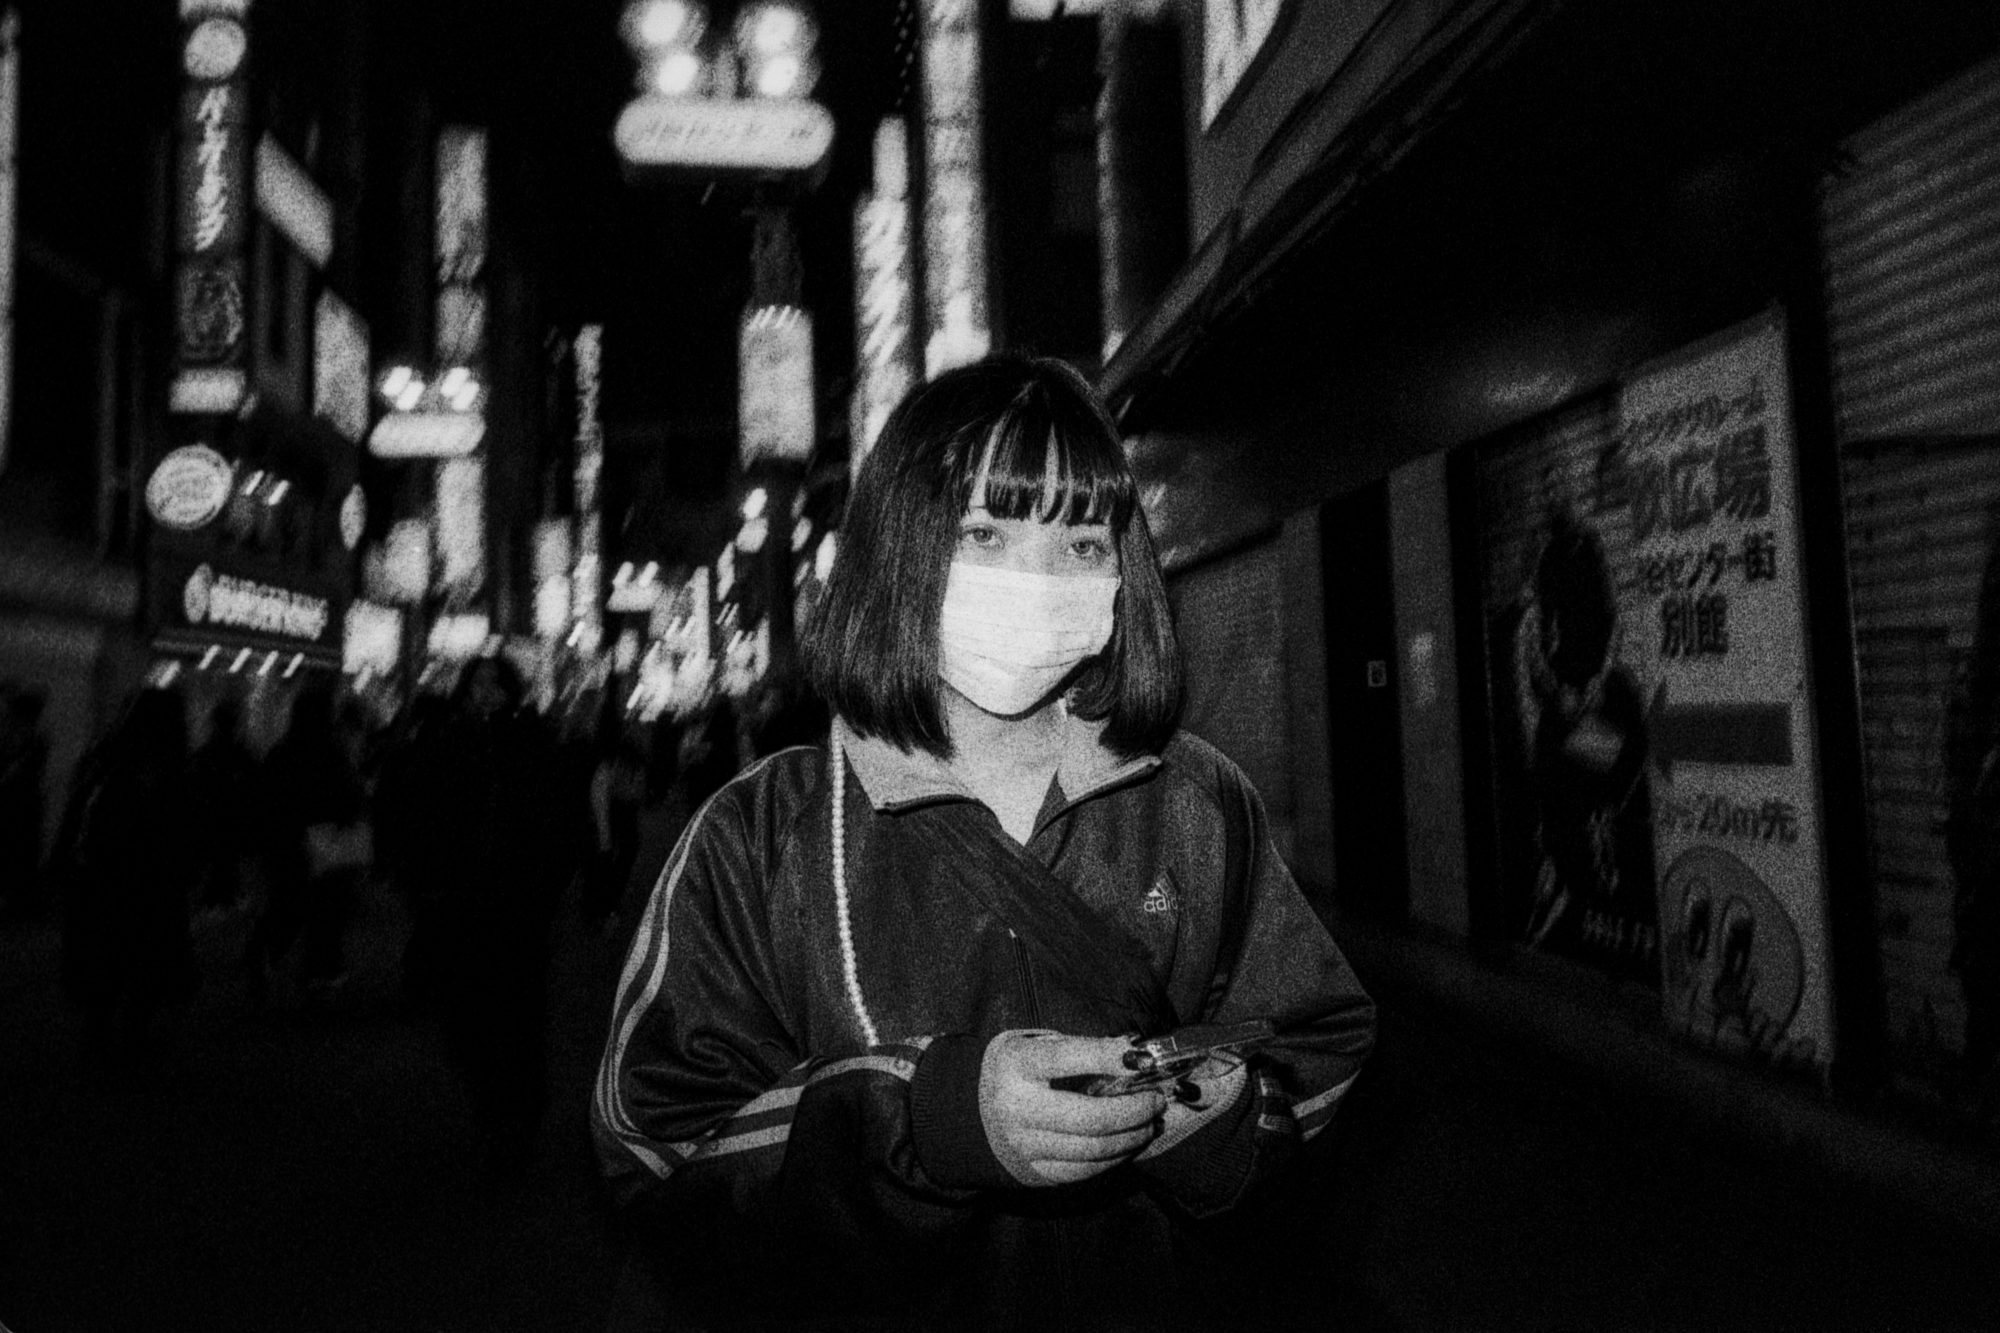 Tokyo Street Photography with Joe Greer